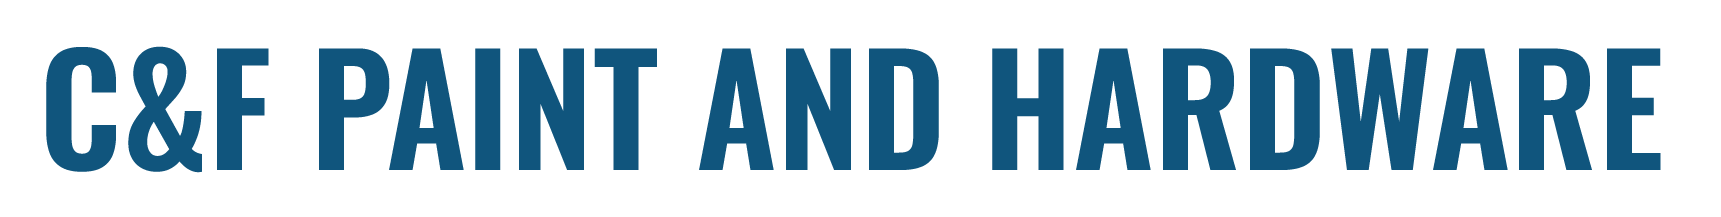 C & F Paint and Hardware Logo